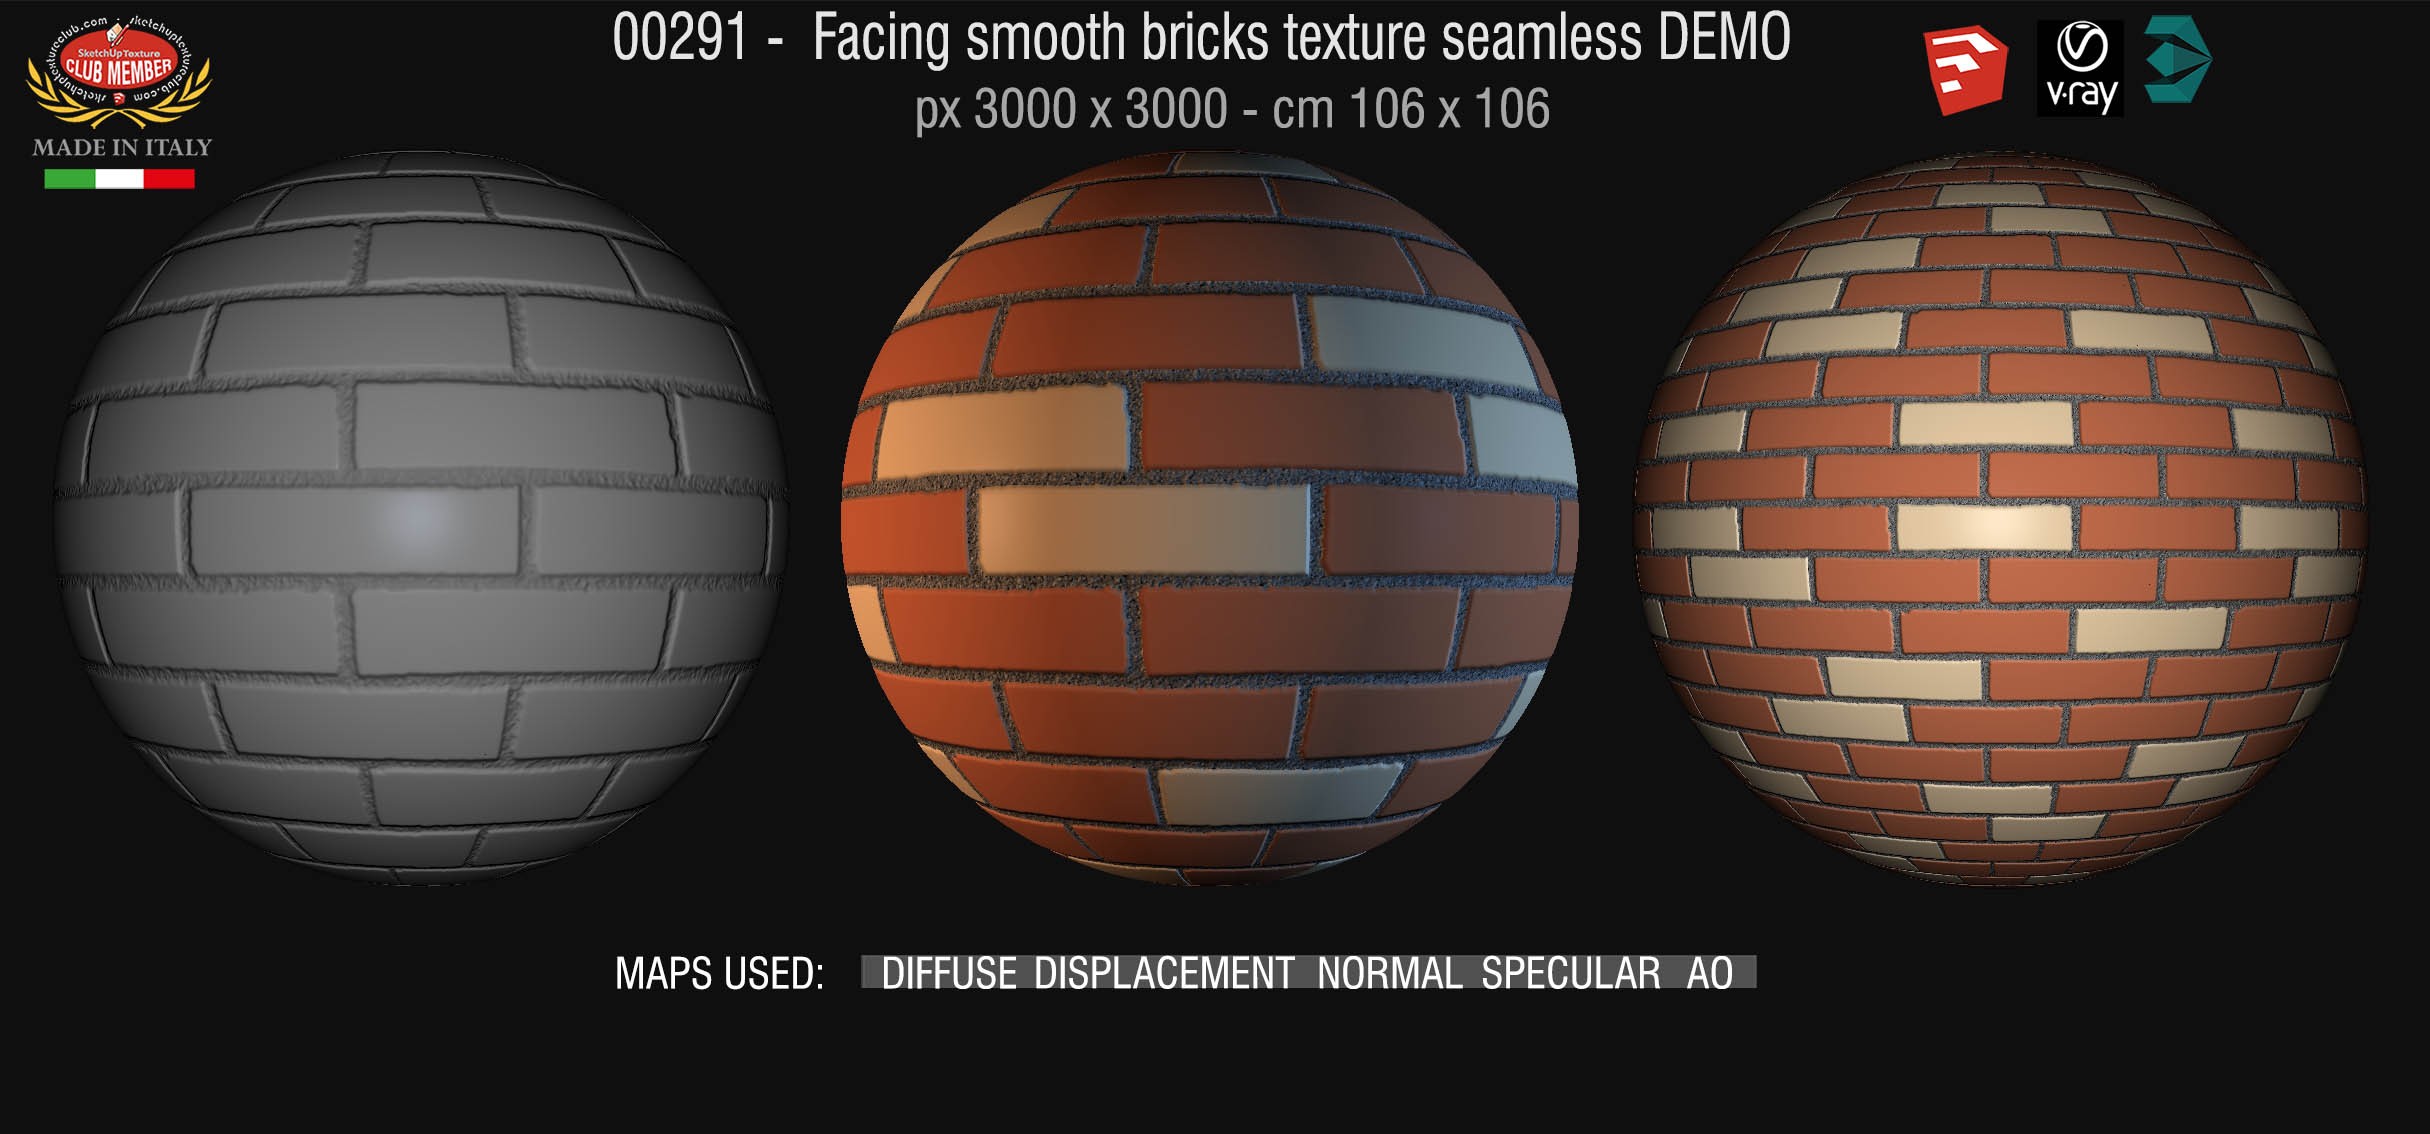 00291 Facing smooth bricks texture seamless + maps DEMO